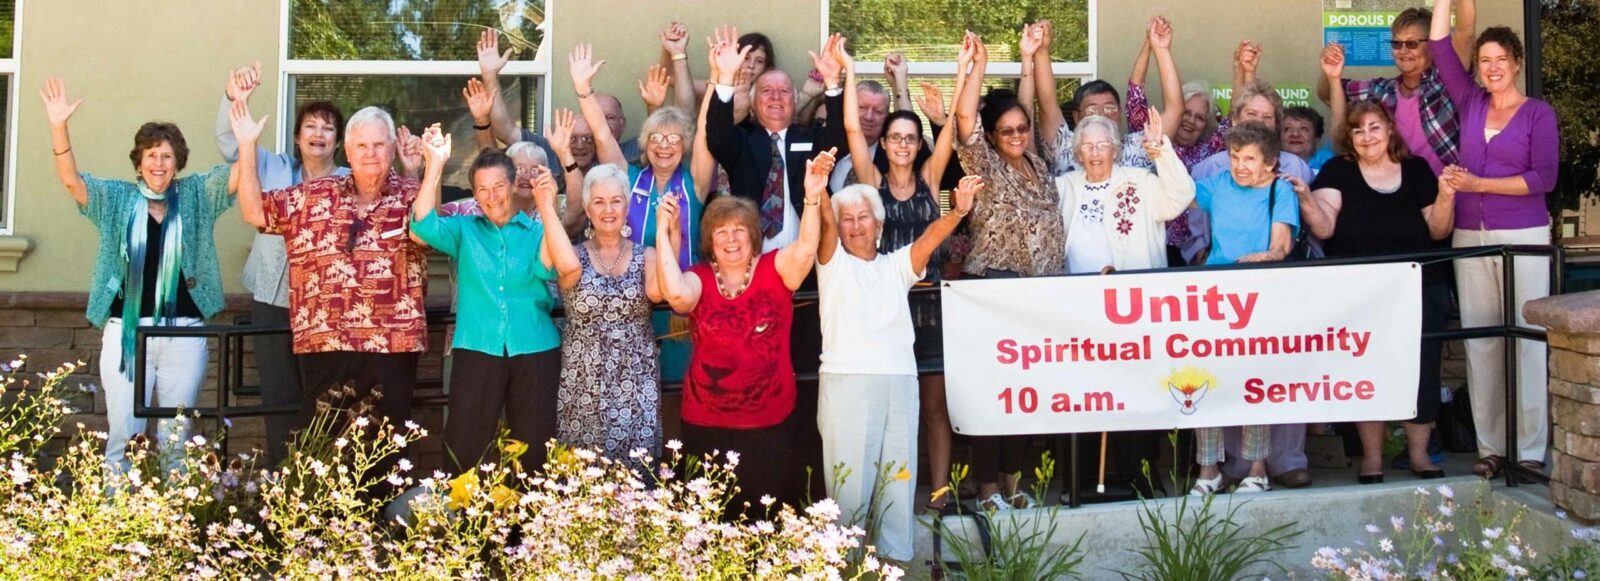 Unity Spiritual Community in Citrus Heights